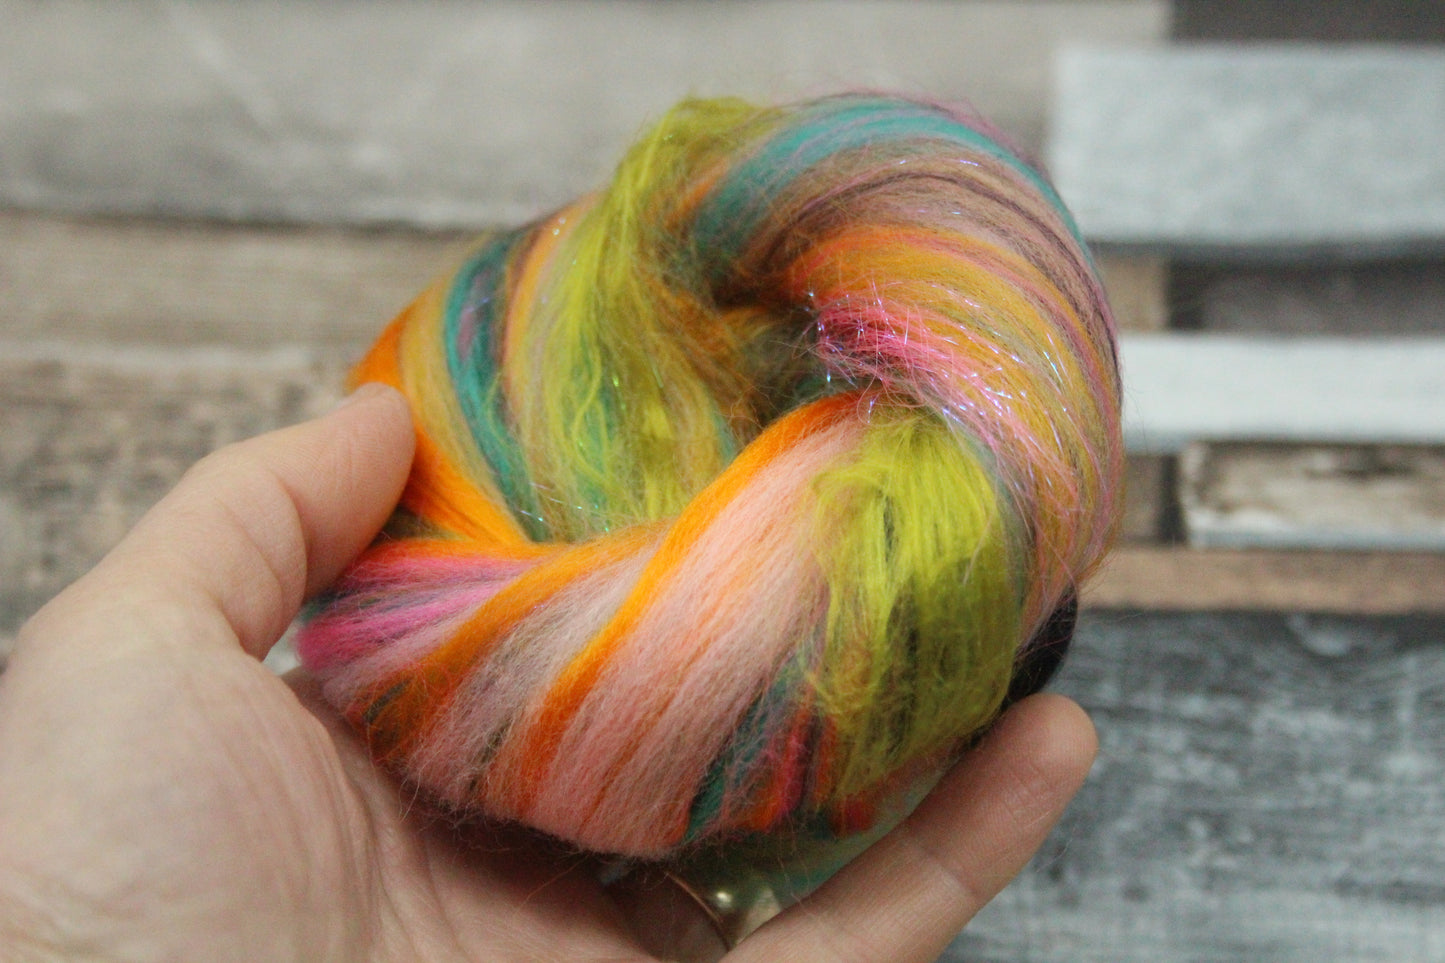 Merino Wool Blend - Yellow Green Pink Orange - 6 grams / 0.2 oz  - Fibre for felting, weaving or spinning